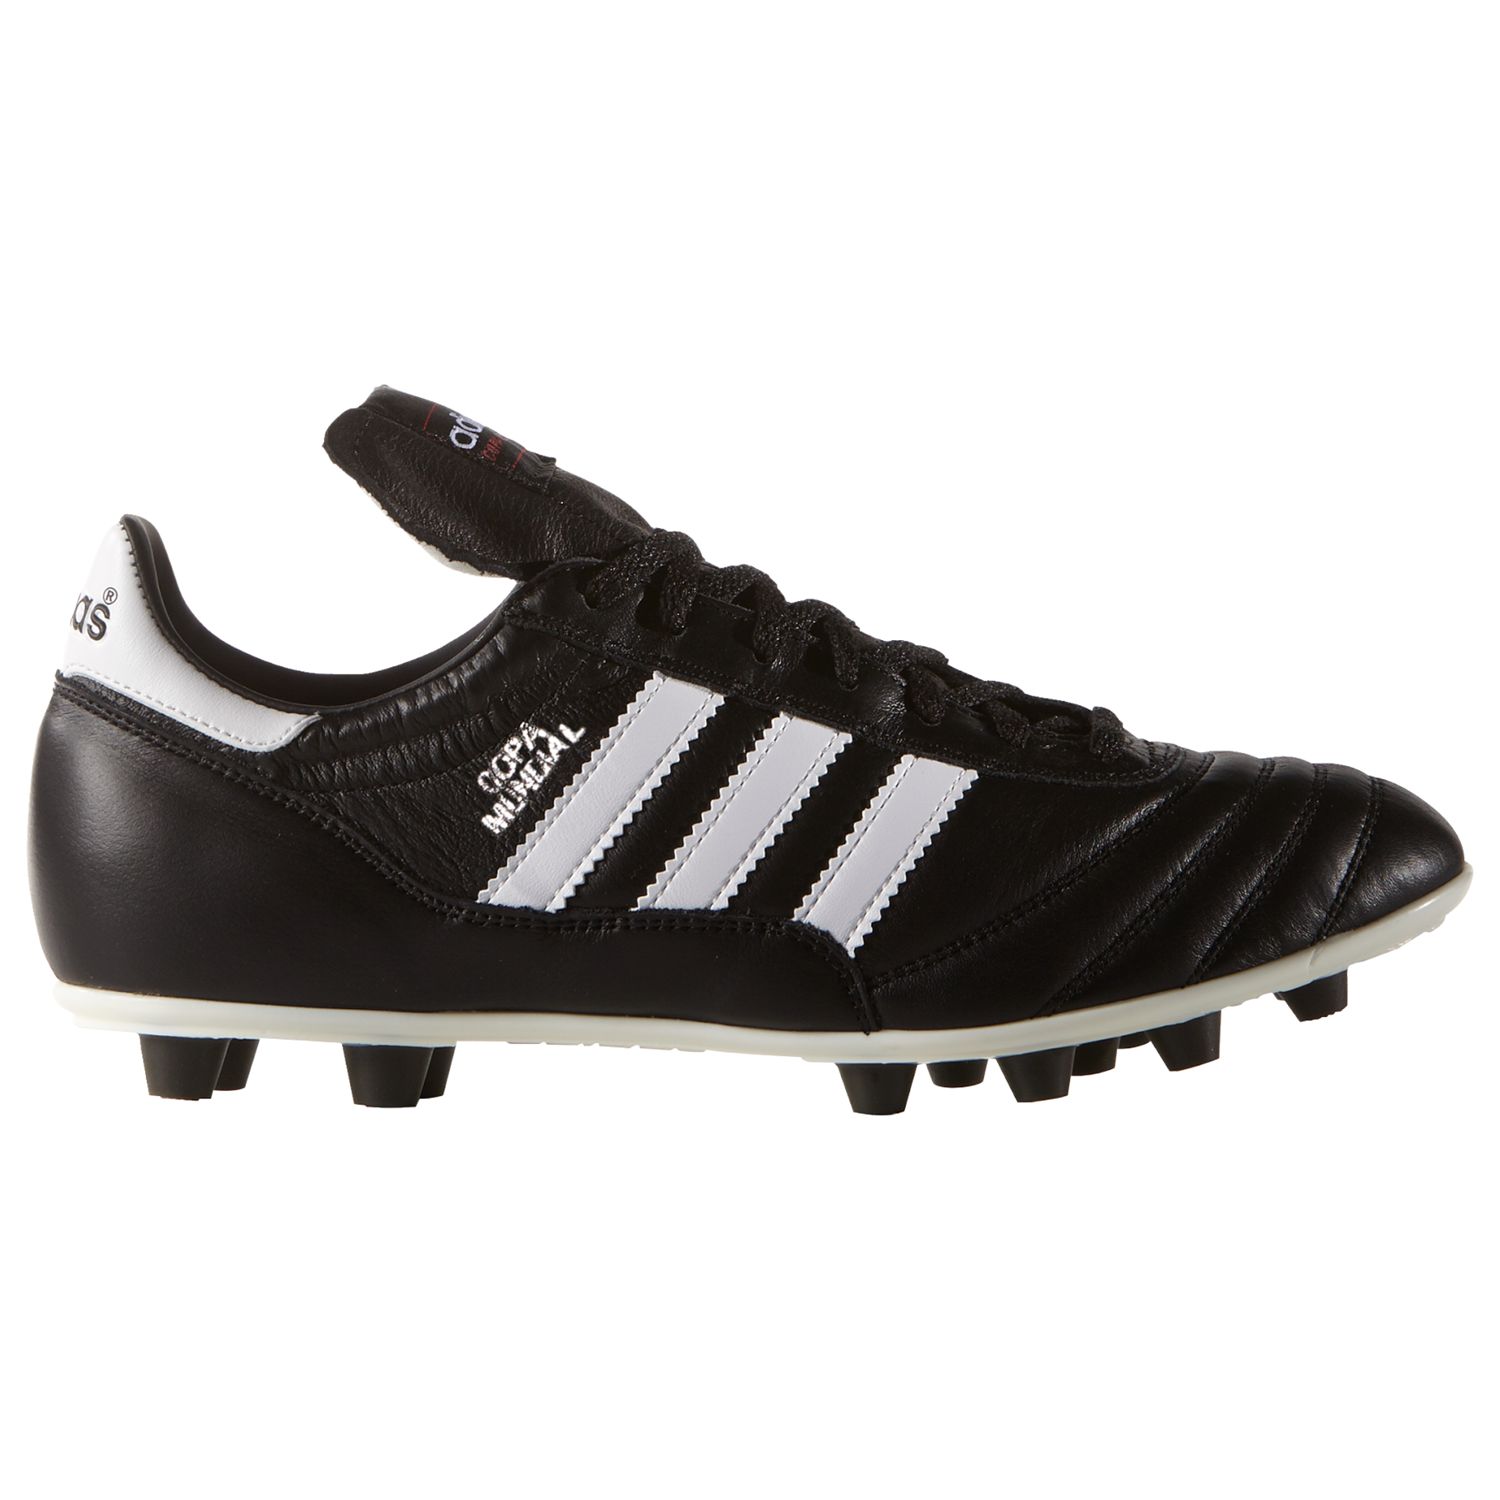 adidas Copa Mundial Samba Men's Football Boots, Black/White